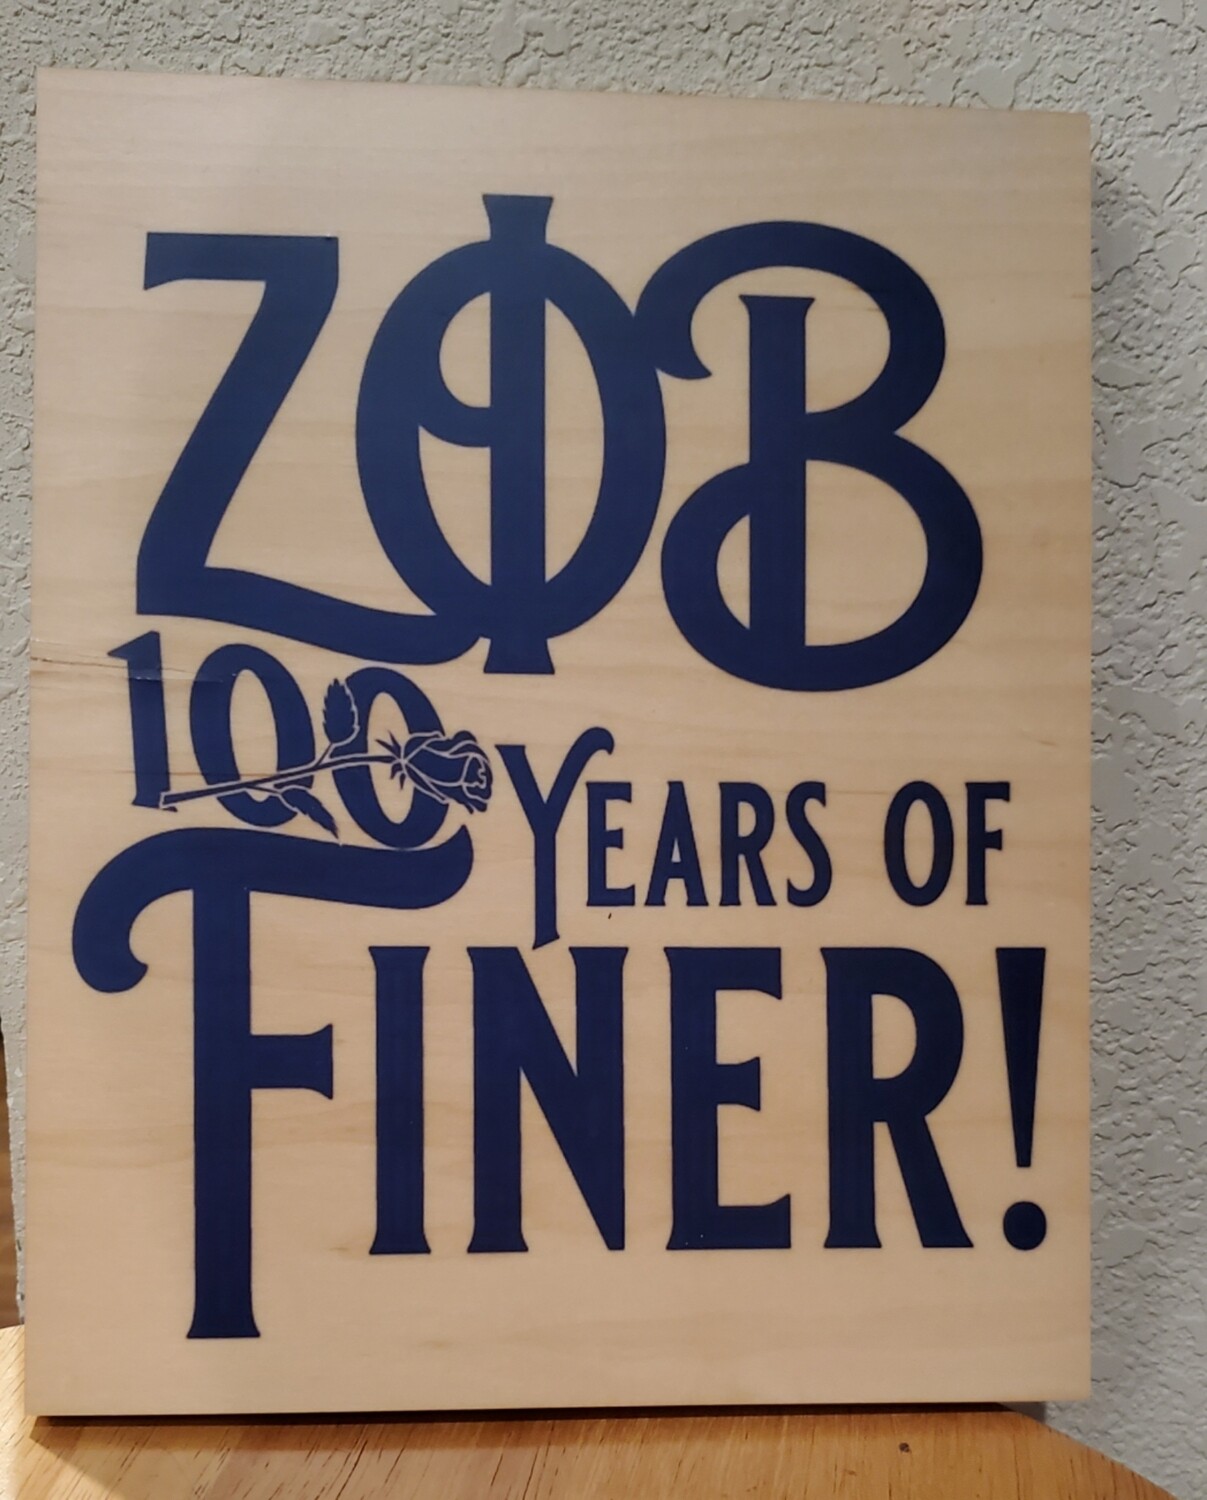 Zeta Phi Beta 100 Years Finer - Wood Display